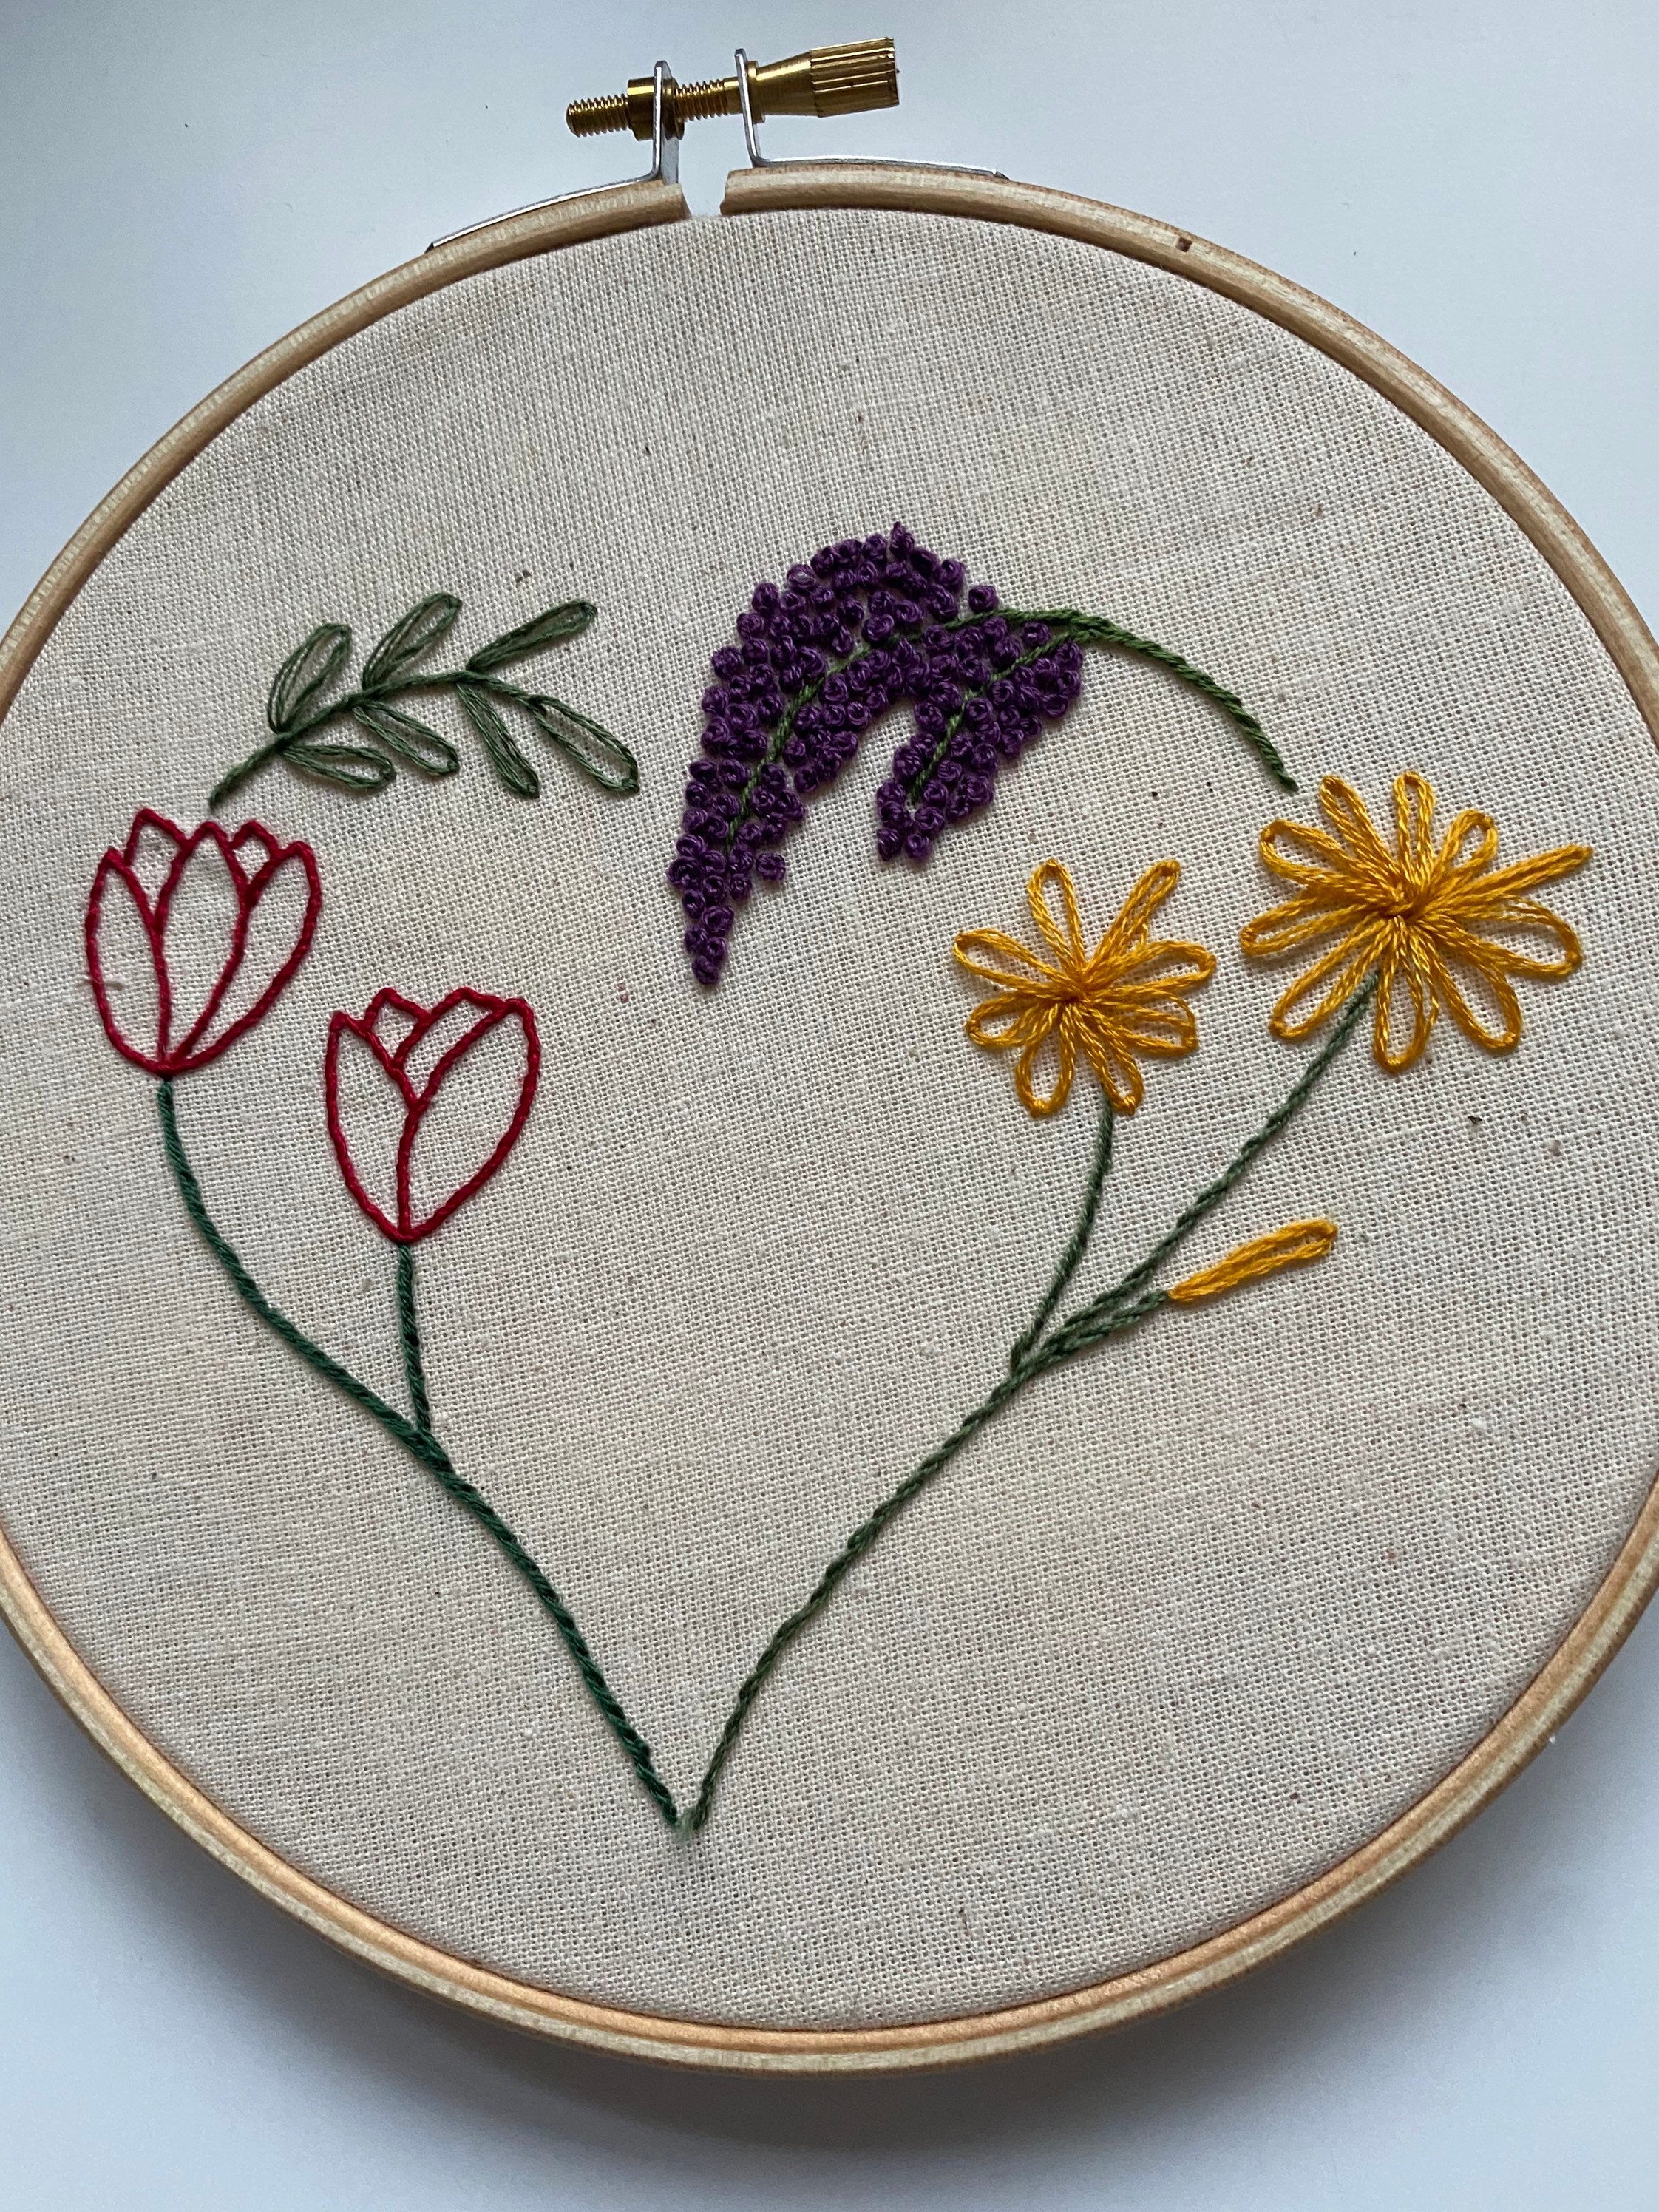 Simplicity 6442 Pattern for Flower Embroidery Transfers – Millard